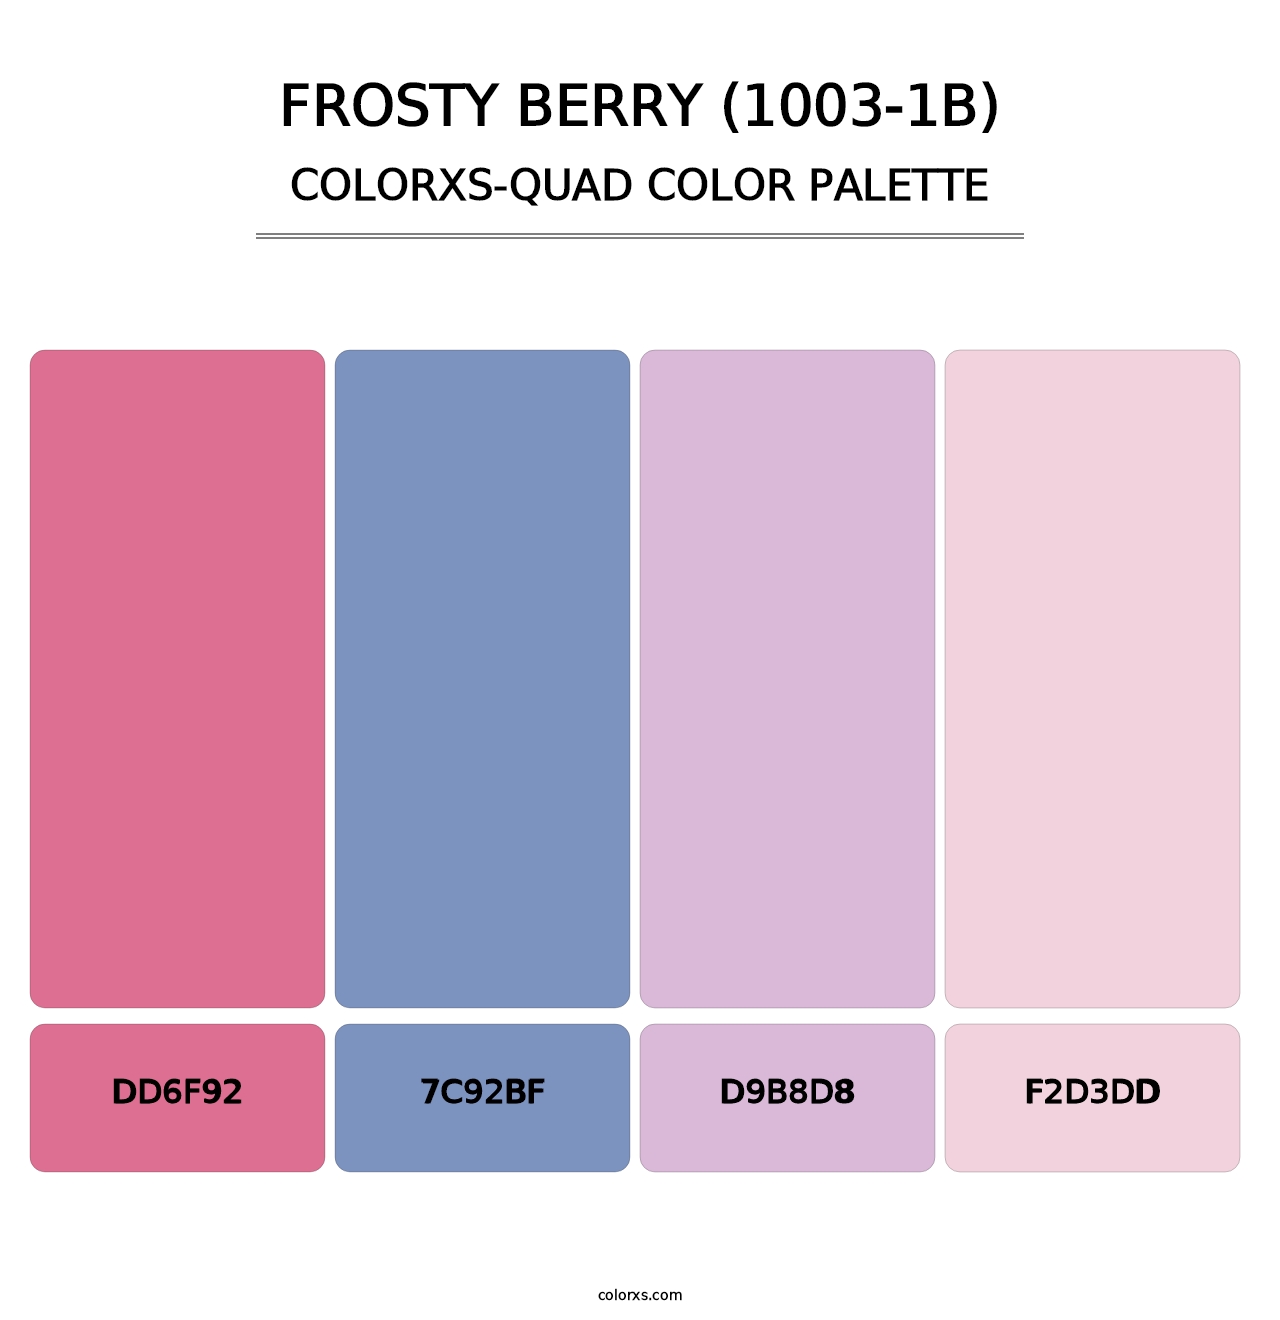 Frosty Berry (1003-1B) - Colorxs Quad Palette